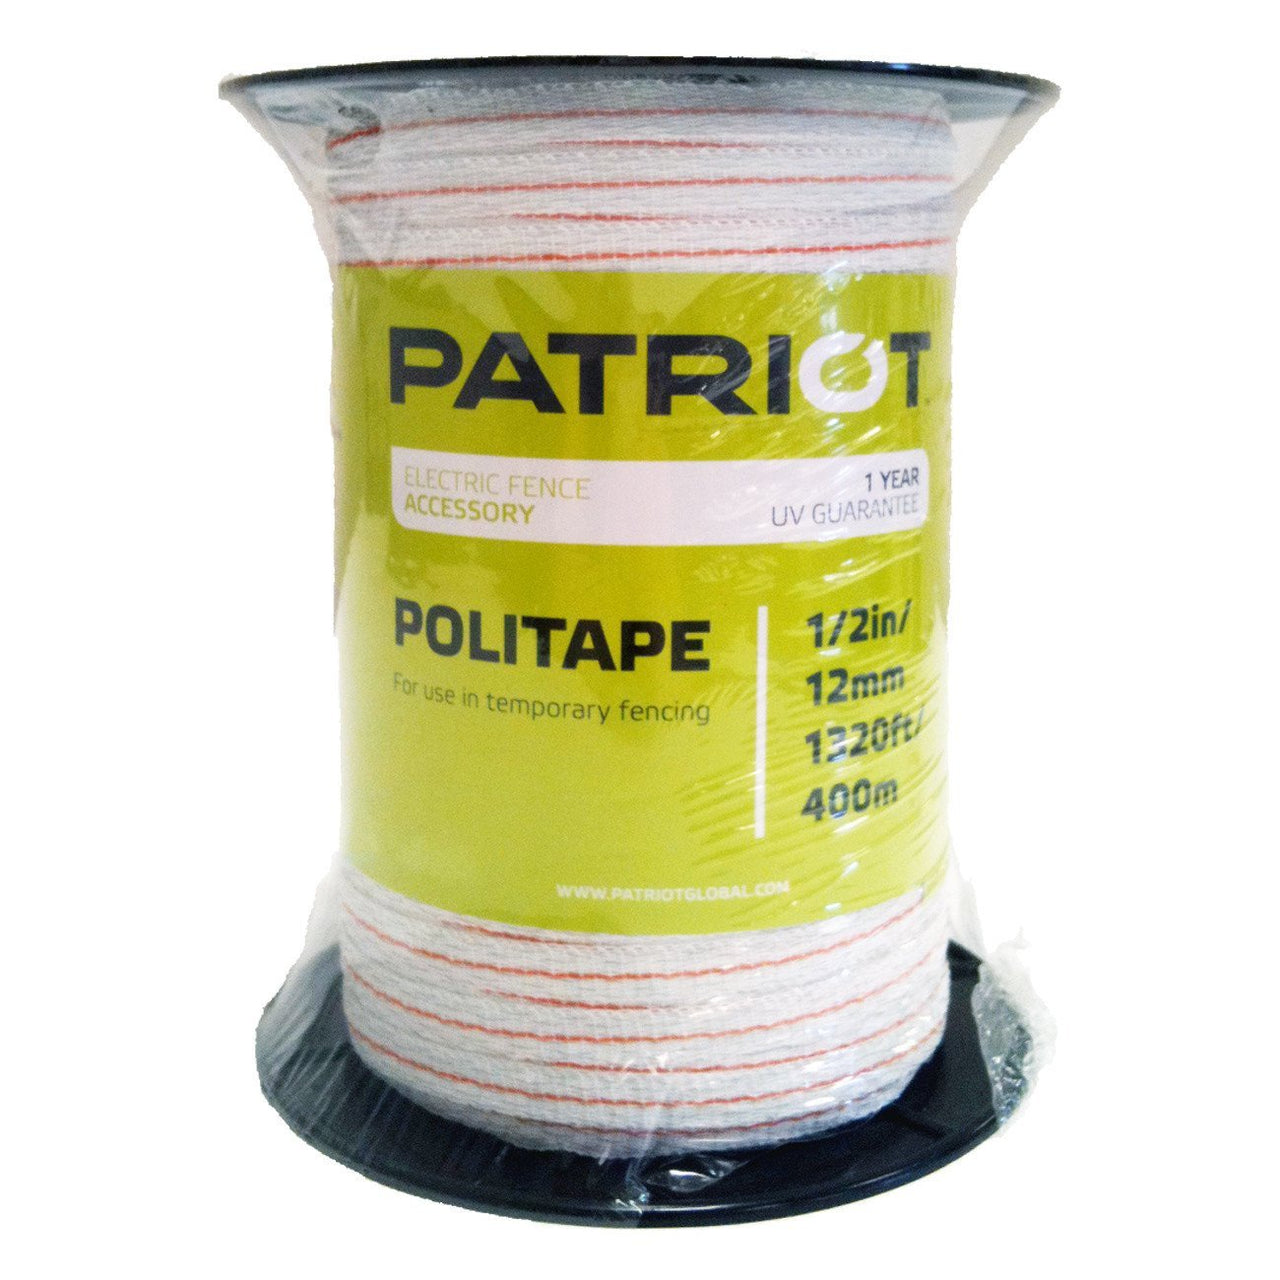 Patriot 1/2 Politape - 1320 (White) - Fencing Patriot - Canada